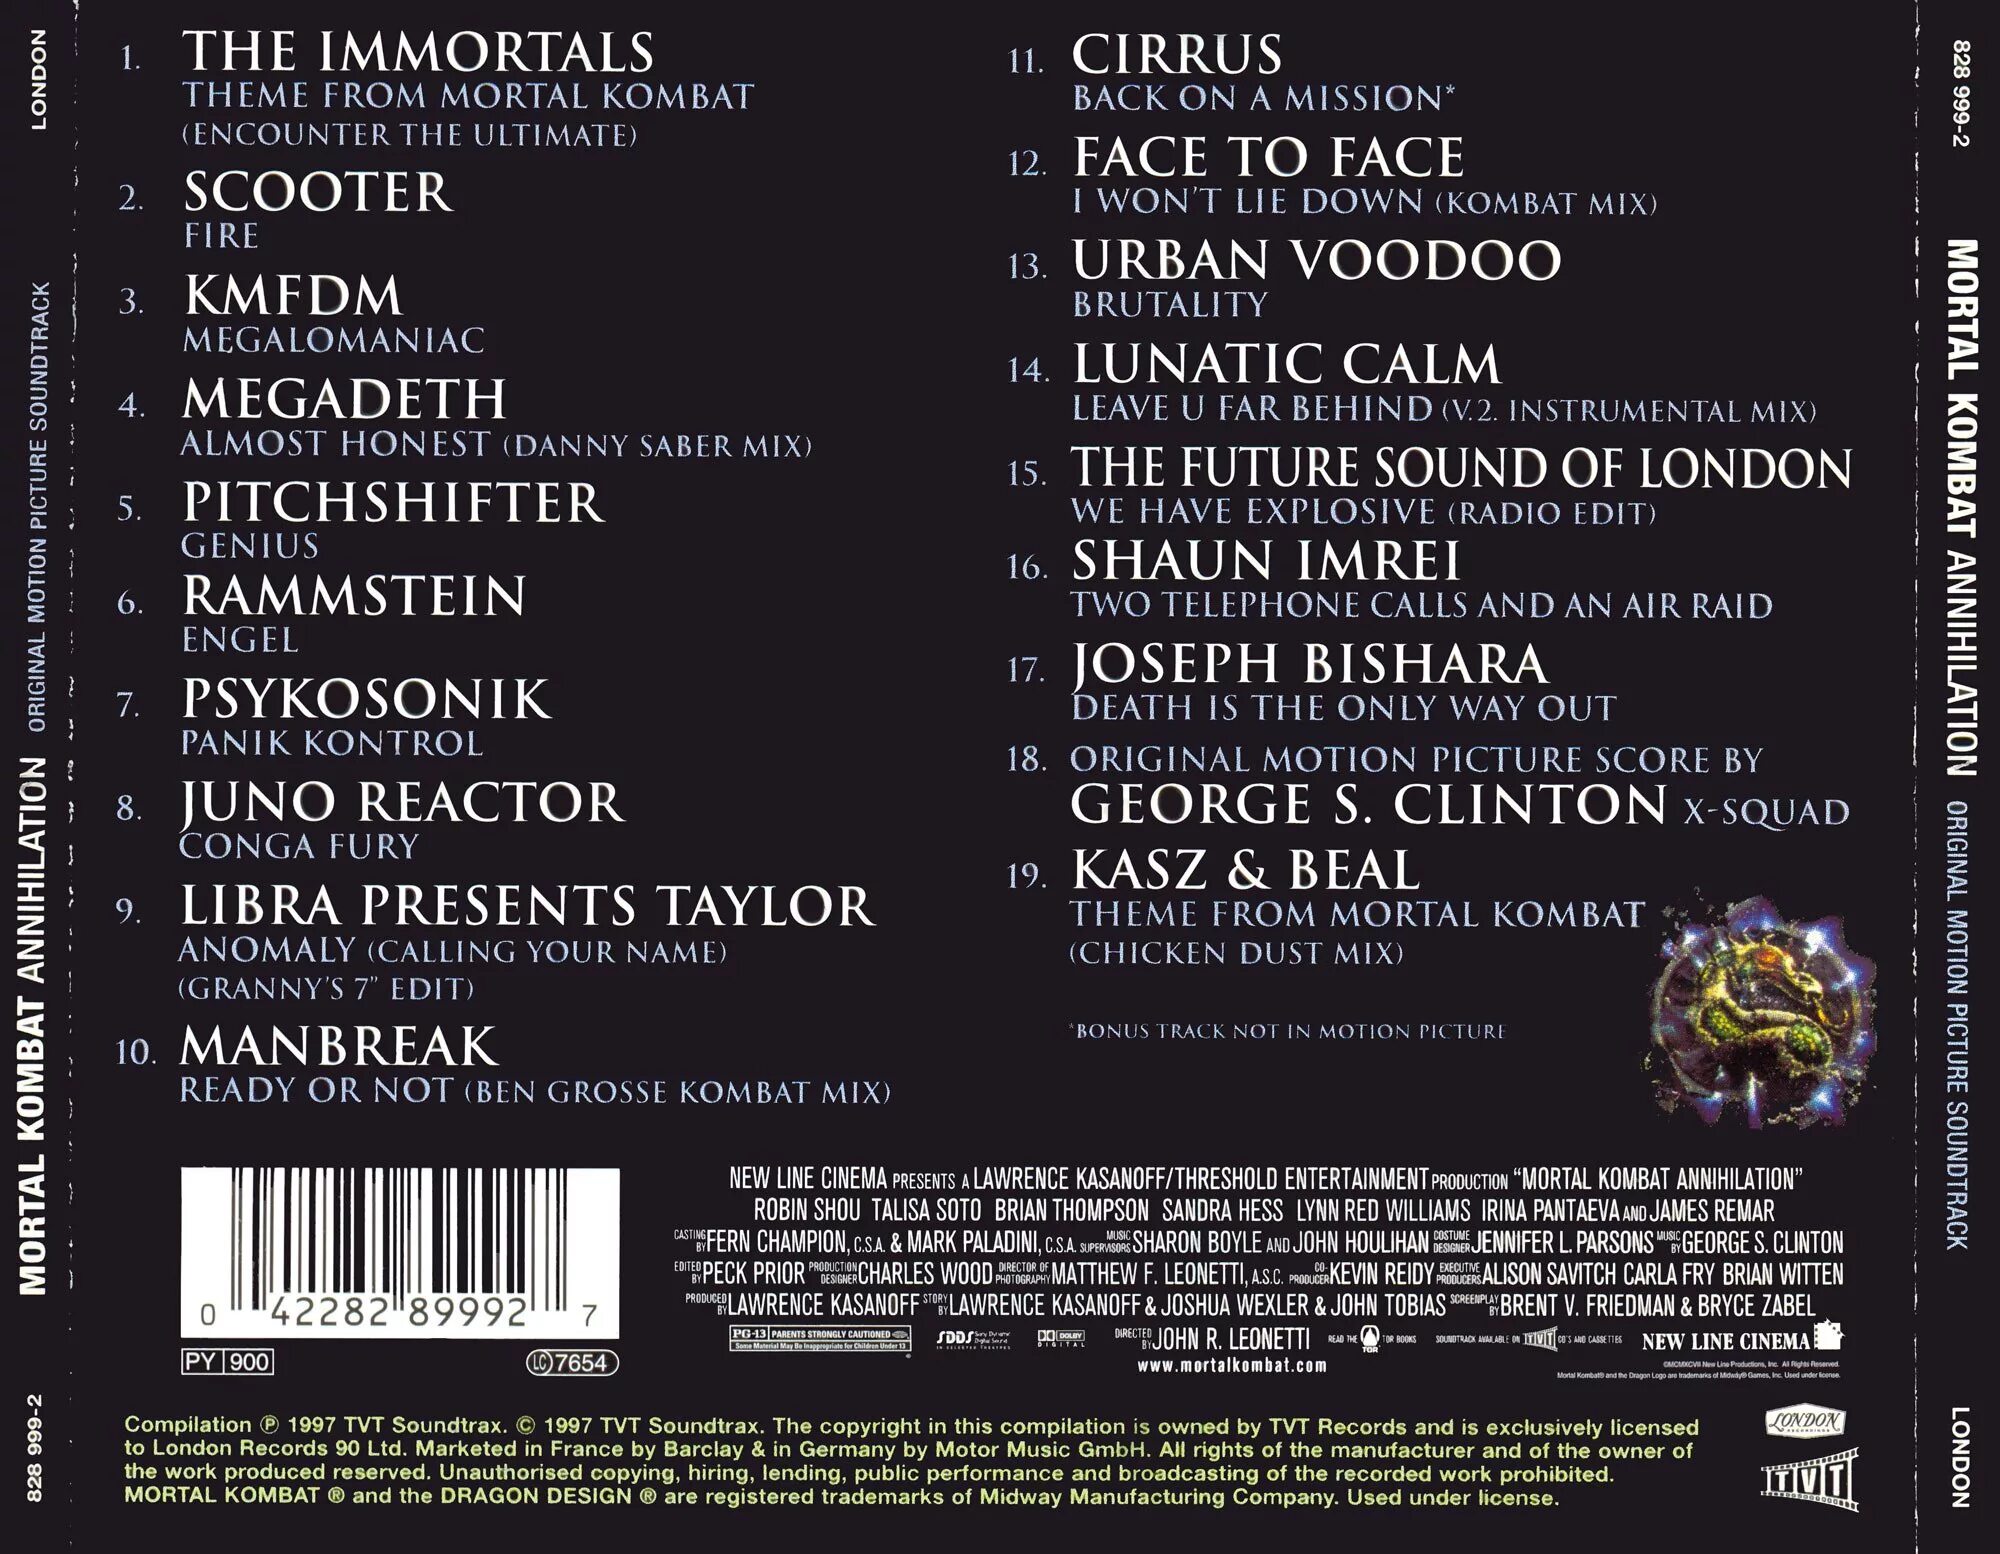 Мортал комбат музыка оригинал. Кассета мортал комбат. OST Mortal Kombat 1995 обложка. Mortal Kombat 2 Annihilation OST. Аудиокассета Mortal Kombat.